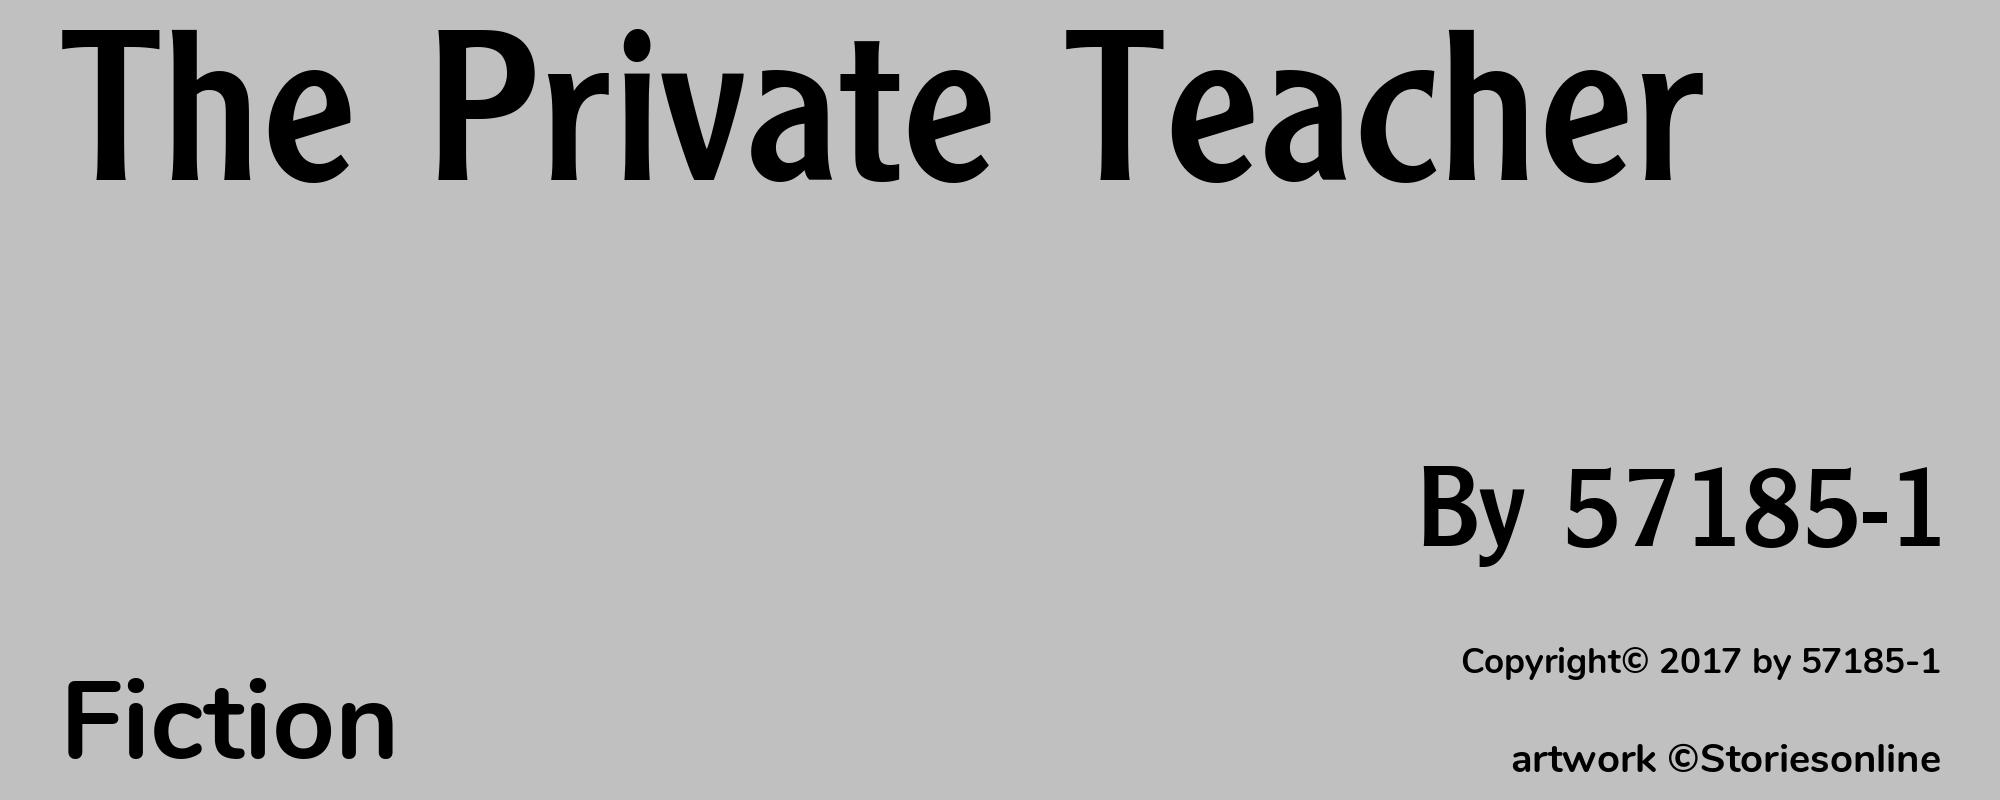 The Private Teacher - Cover